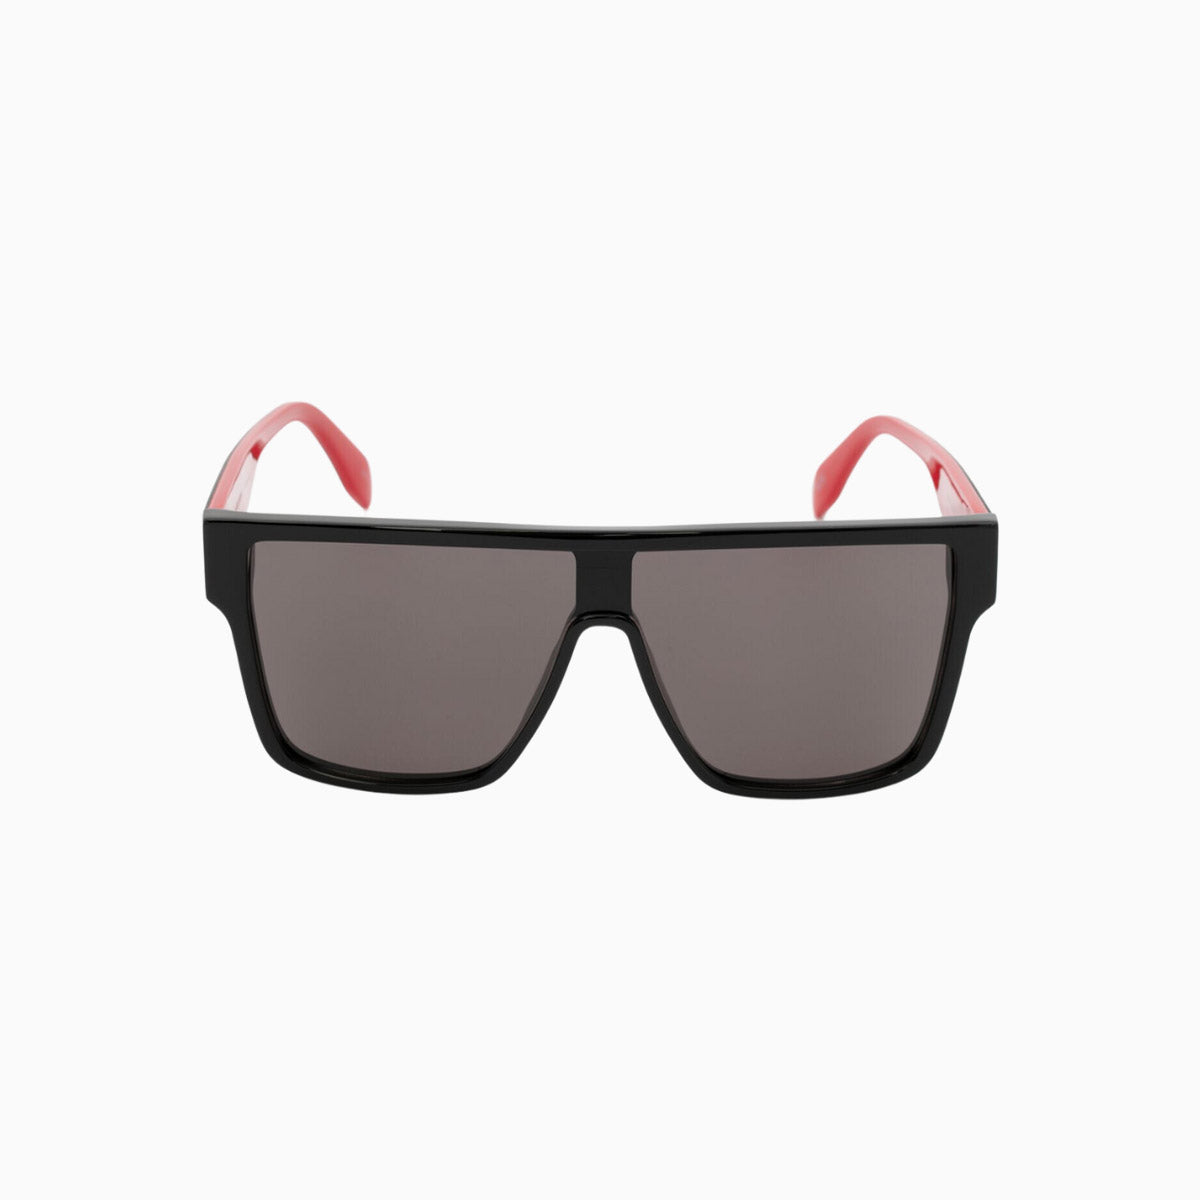 alexander-mcqueen-mens-selvedge-oversized-mask-sunglasses-in-black-red-am0354s-003